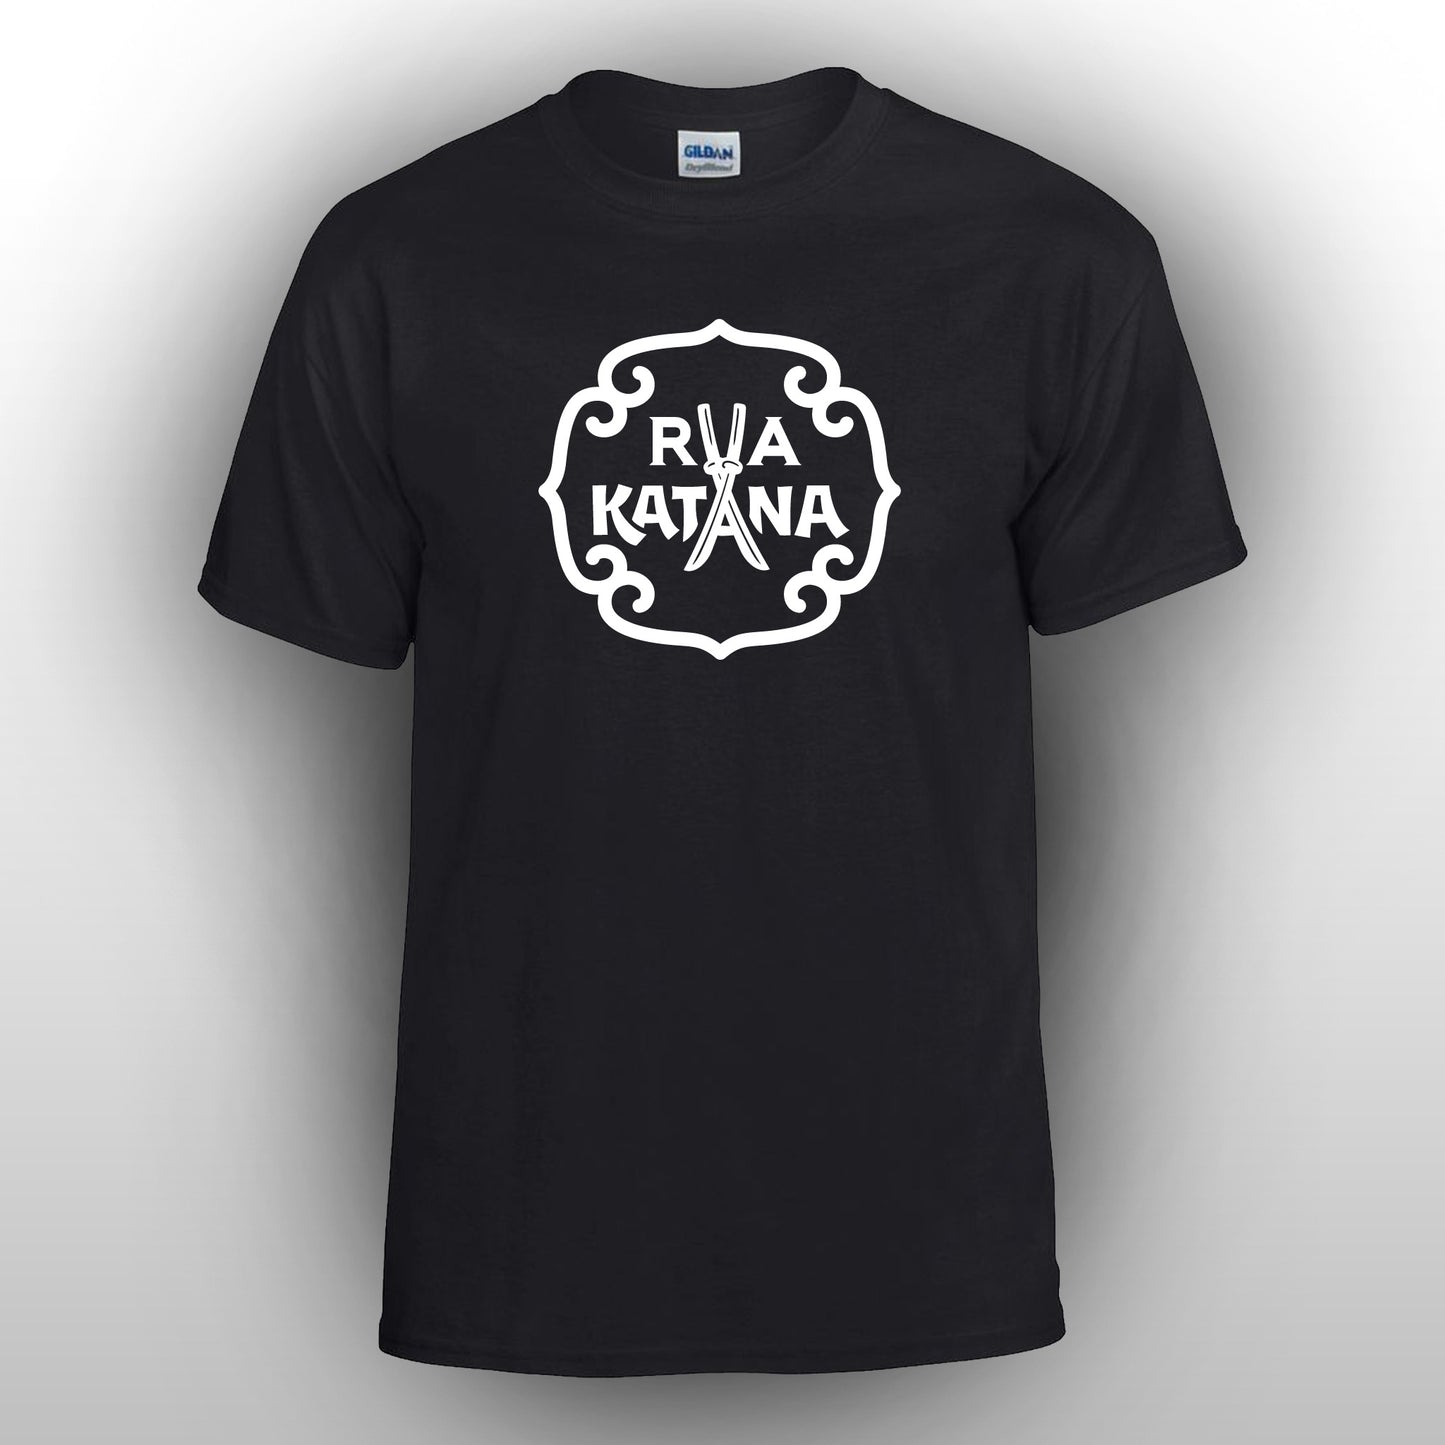 RVA Katana T-shirt